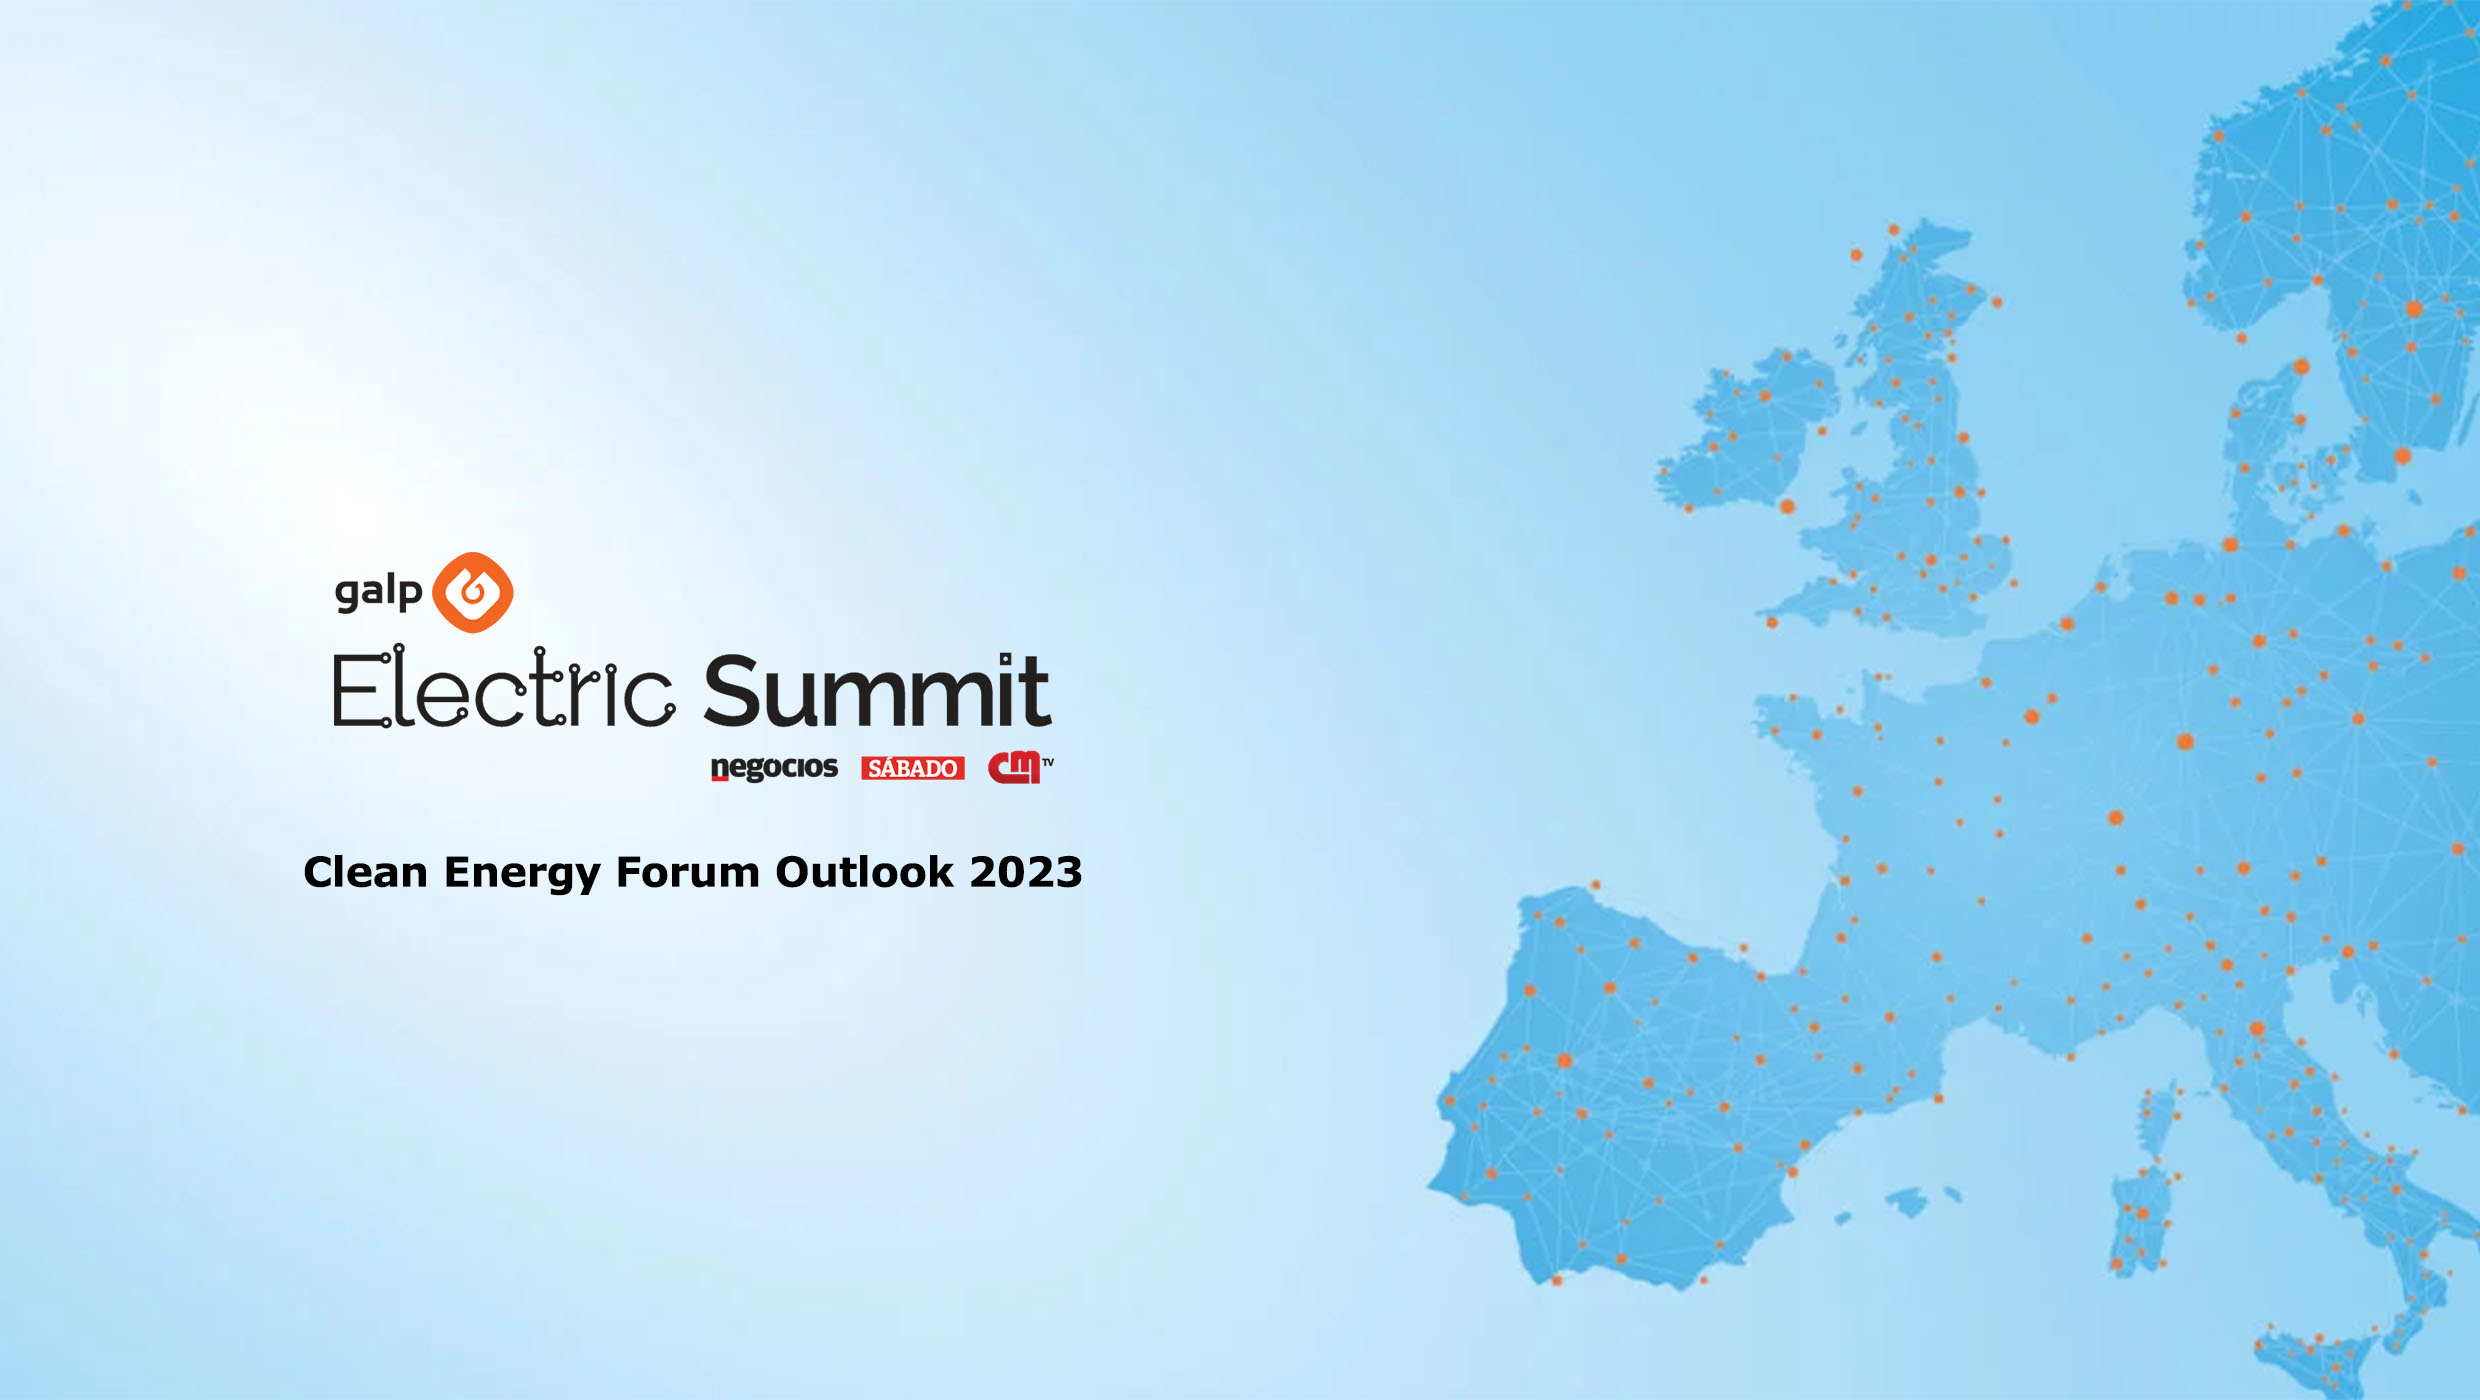 e-as-principais-conclusoes-do-clean-energy-forum-outlook-2023-foram